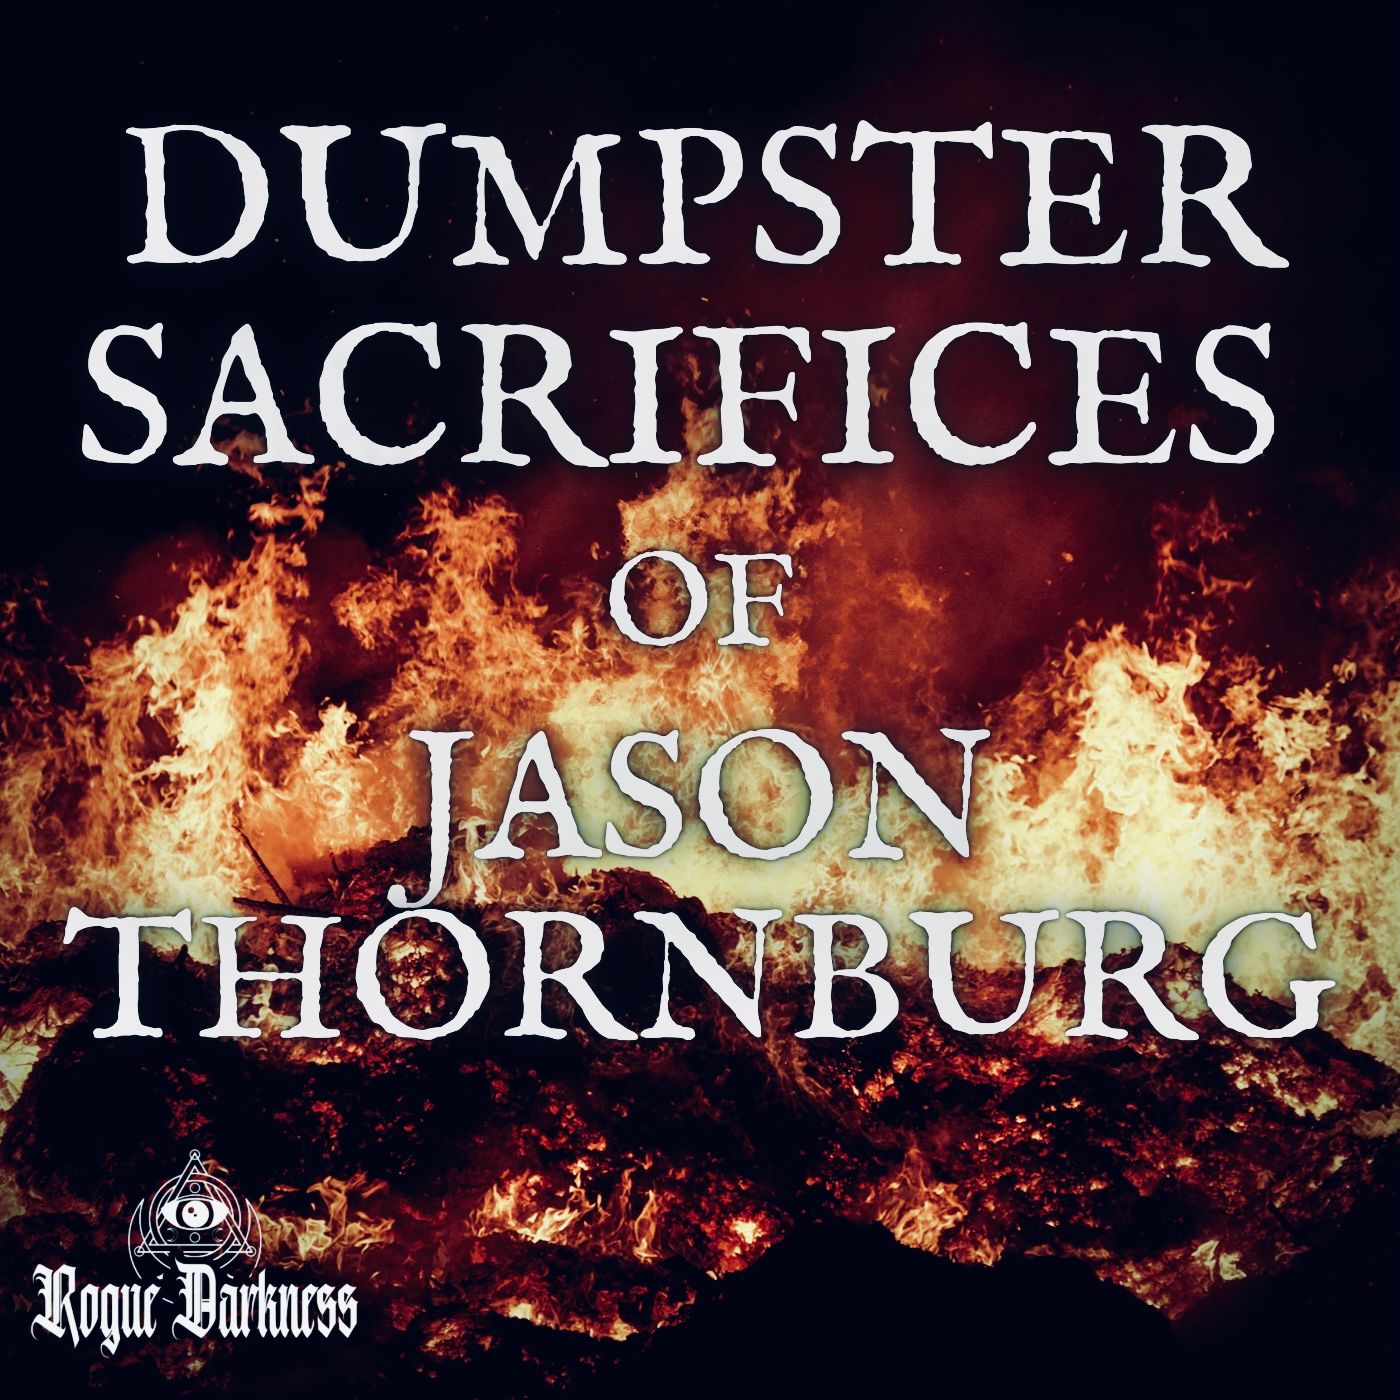 XLV: Jason Thornburg & His Dumpster Sacrifices